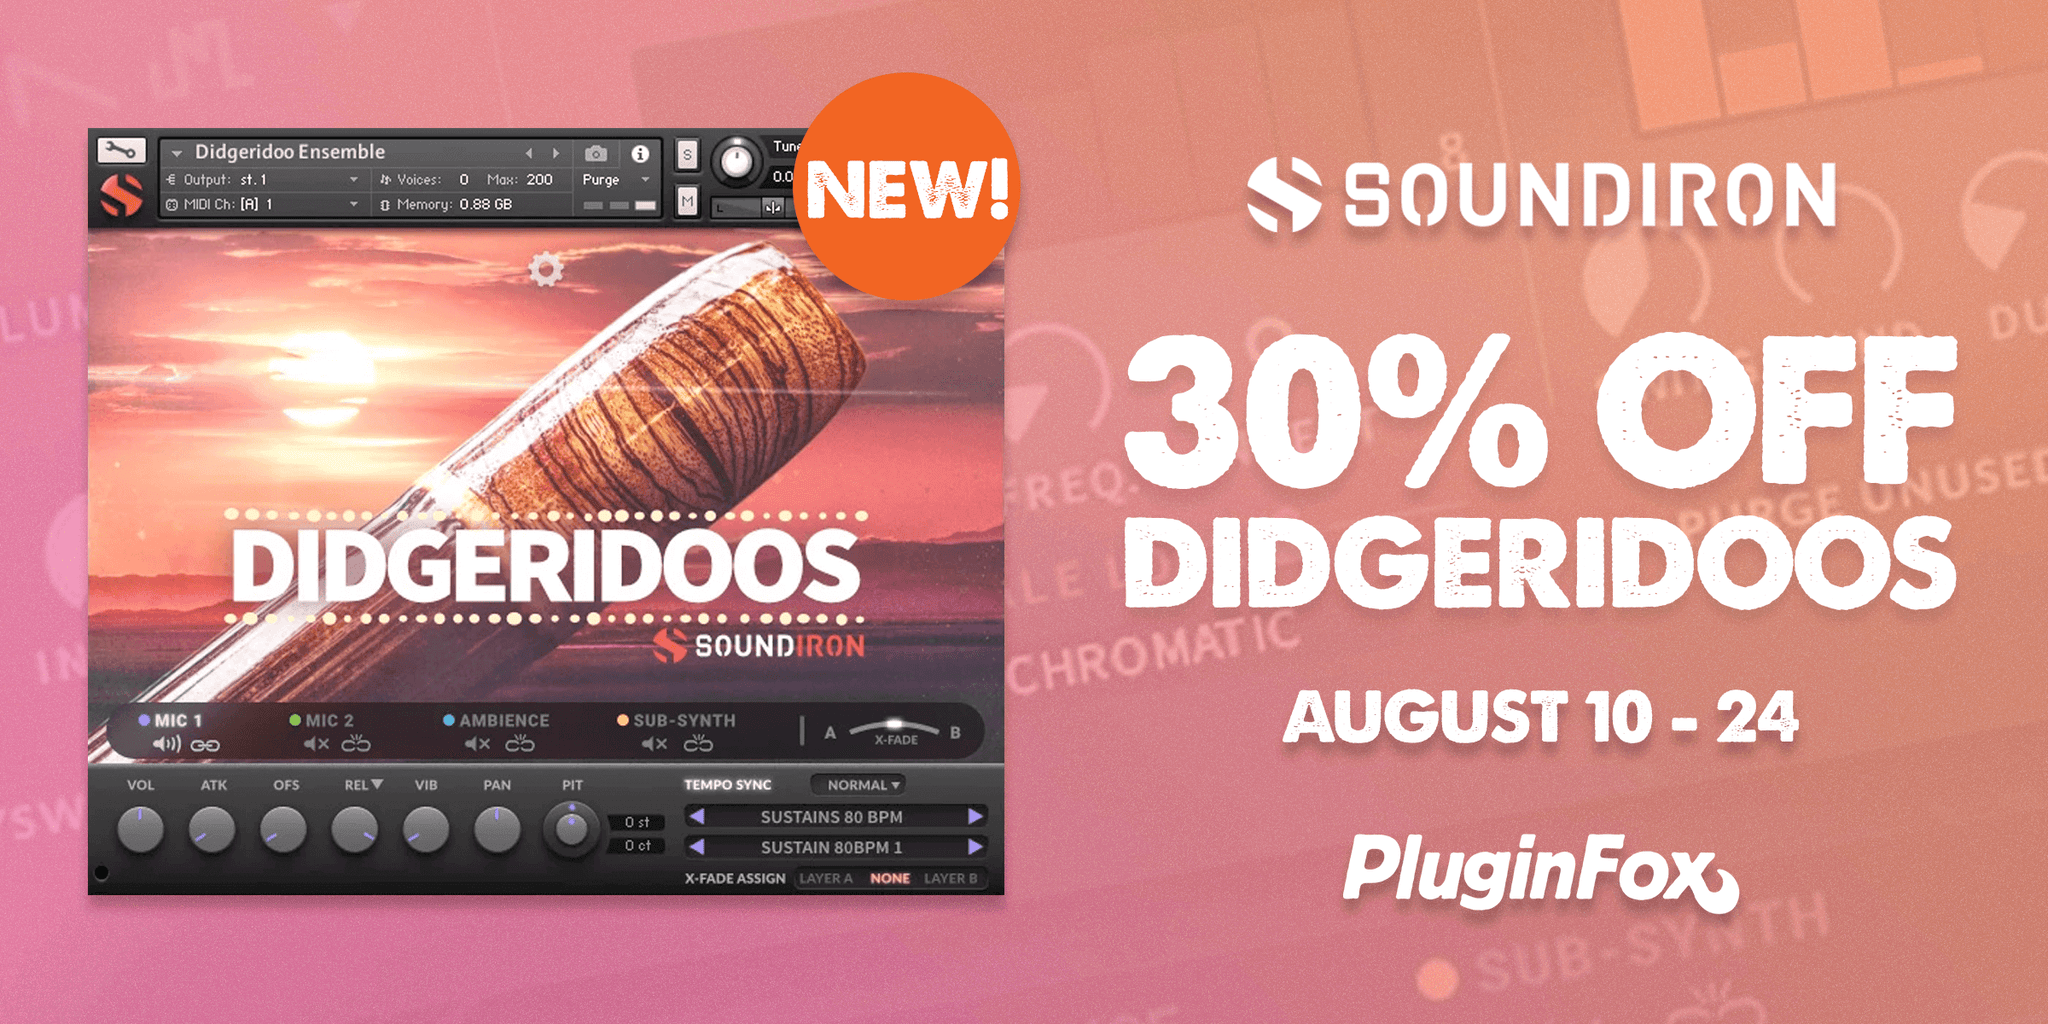 Soundiron Didgeridoos Intro Sale - Aug 10-24